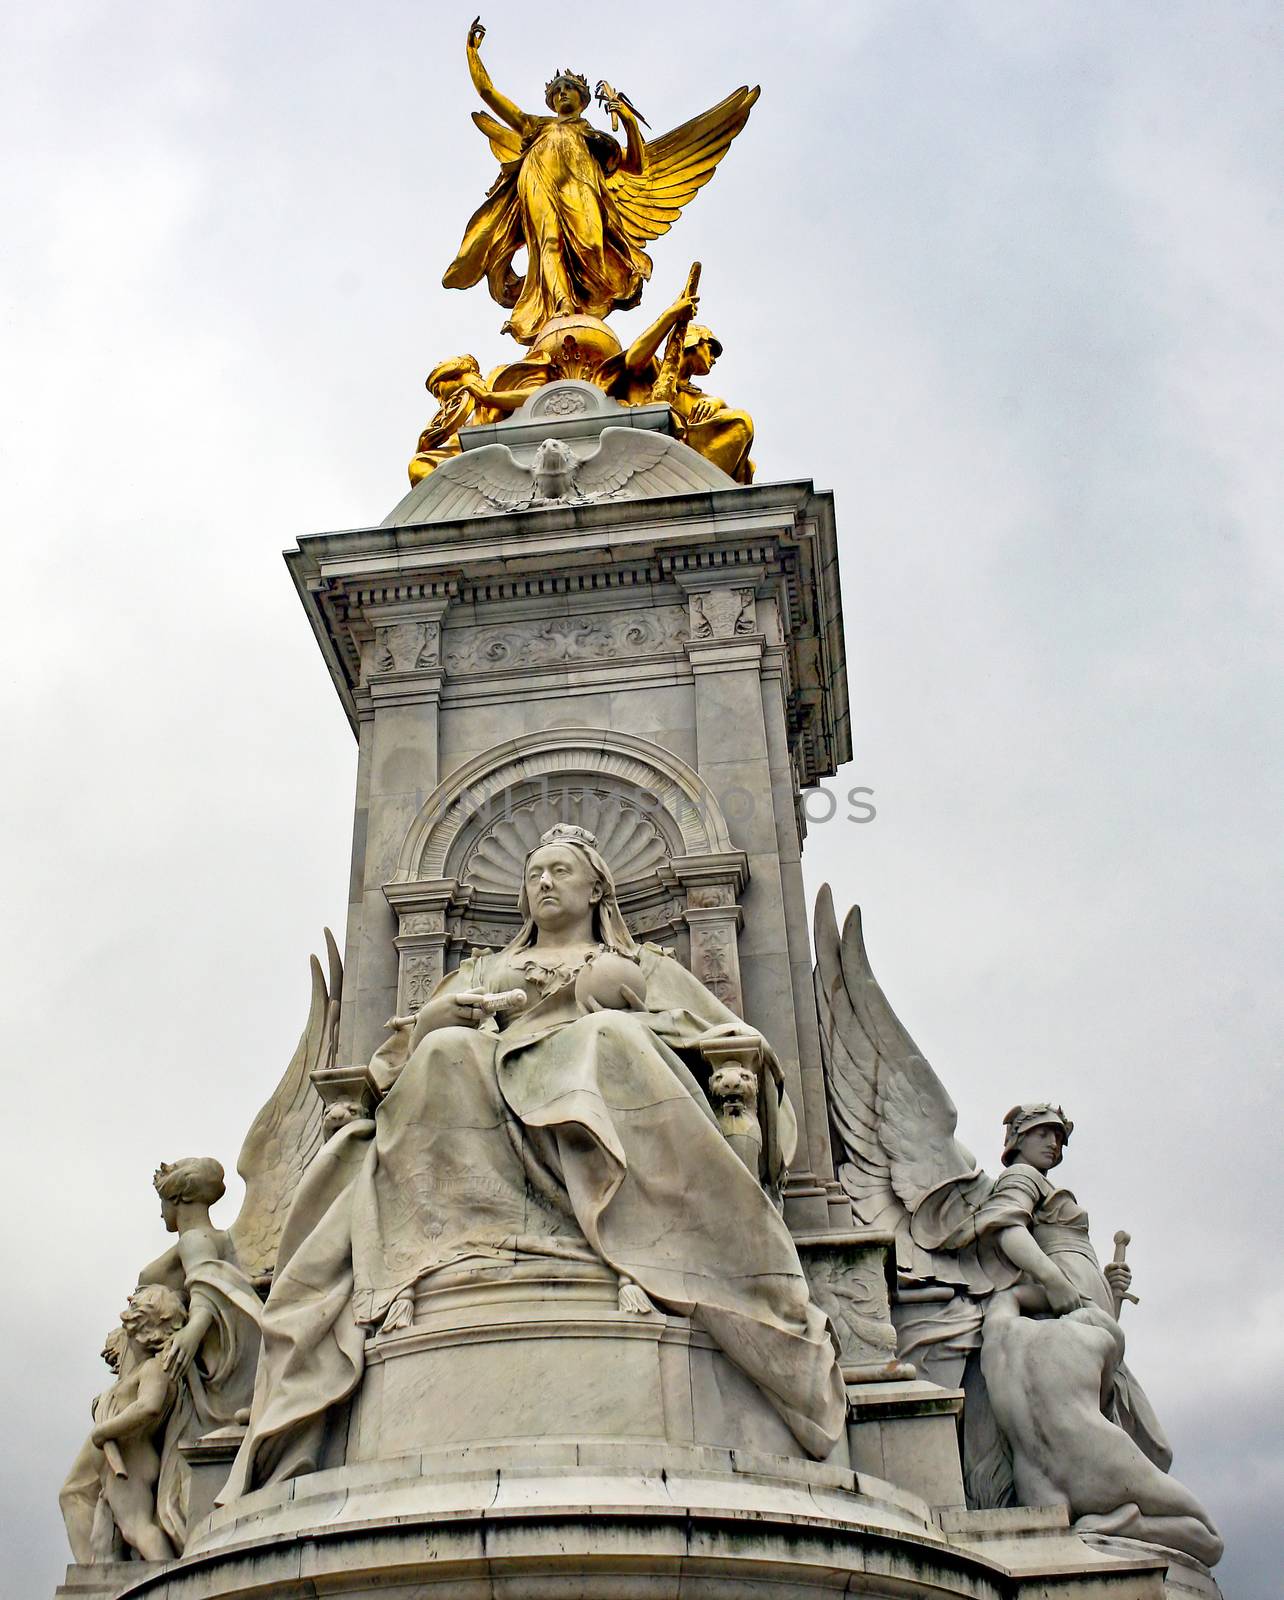 The Queen Victoria Memorial in London, England